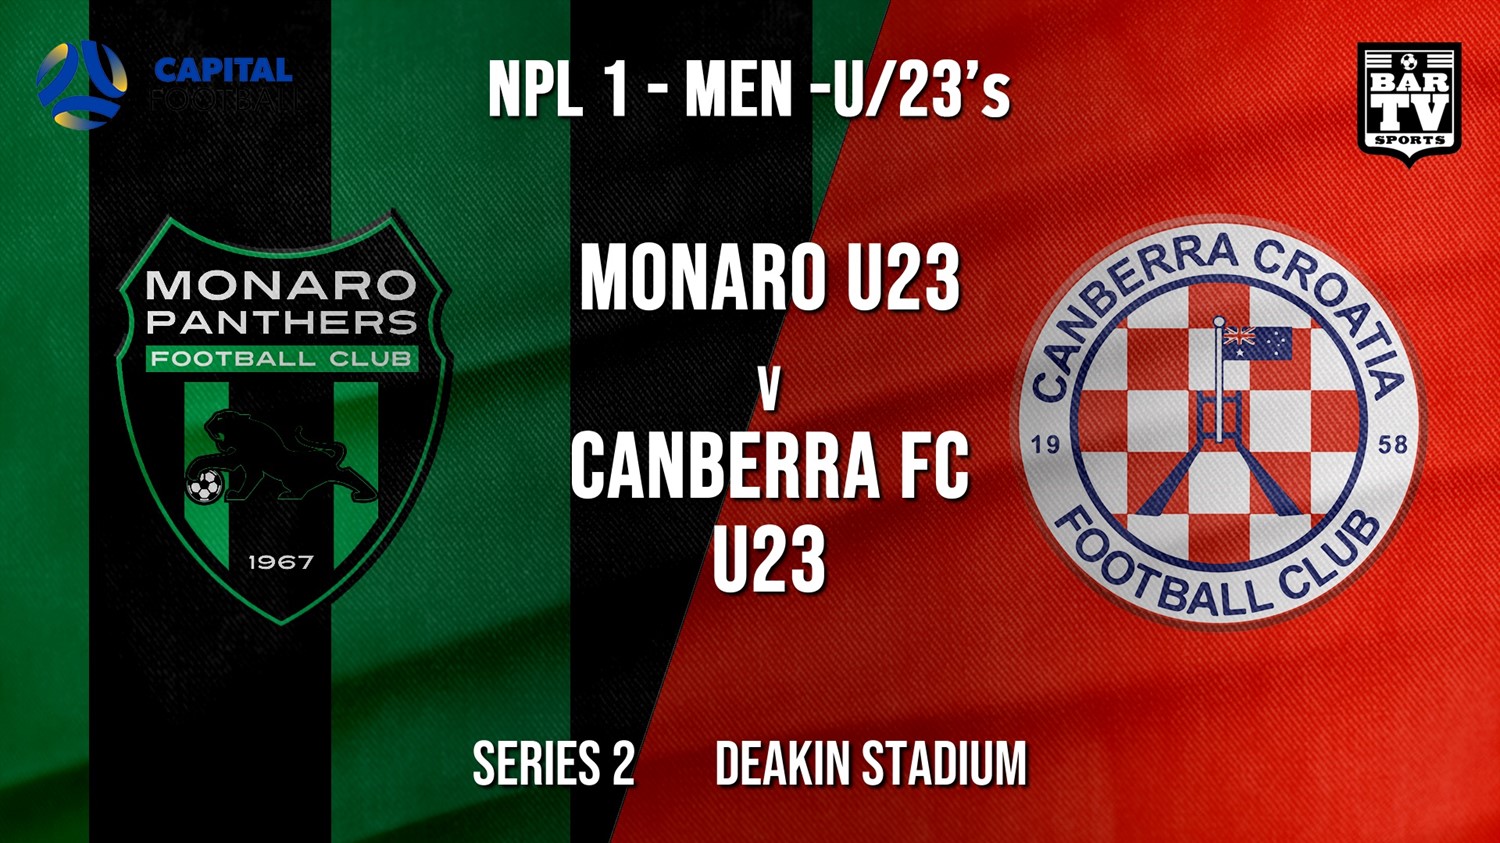 NPL1 Men - U23 - Capital Football  Series 2 - Monaro Panthers U23 v Canberra FC U23 Minigame Slate Image